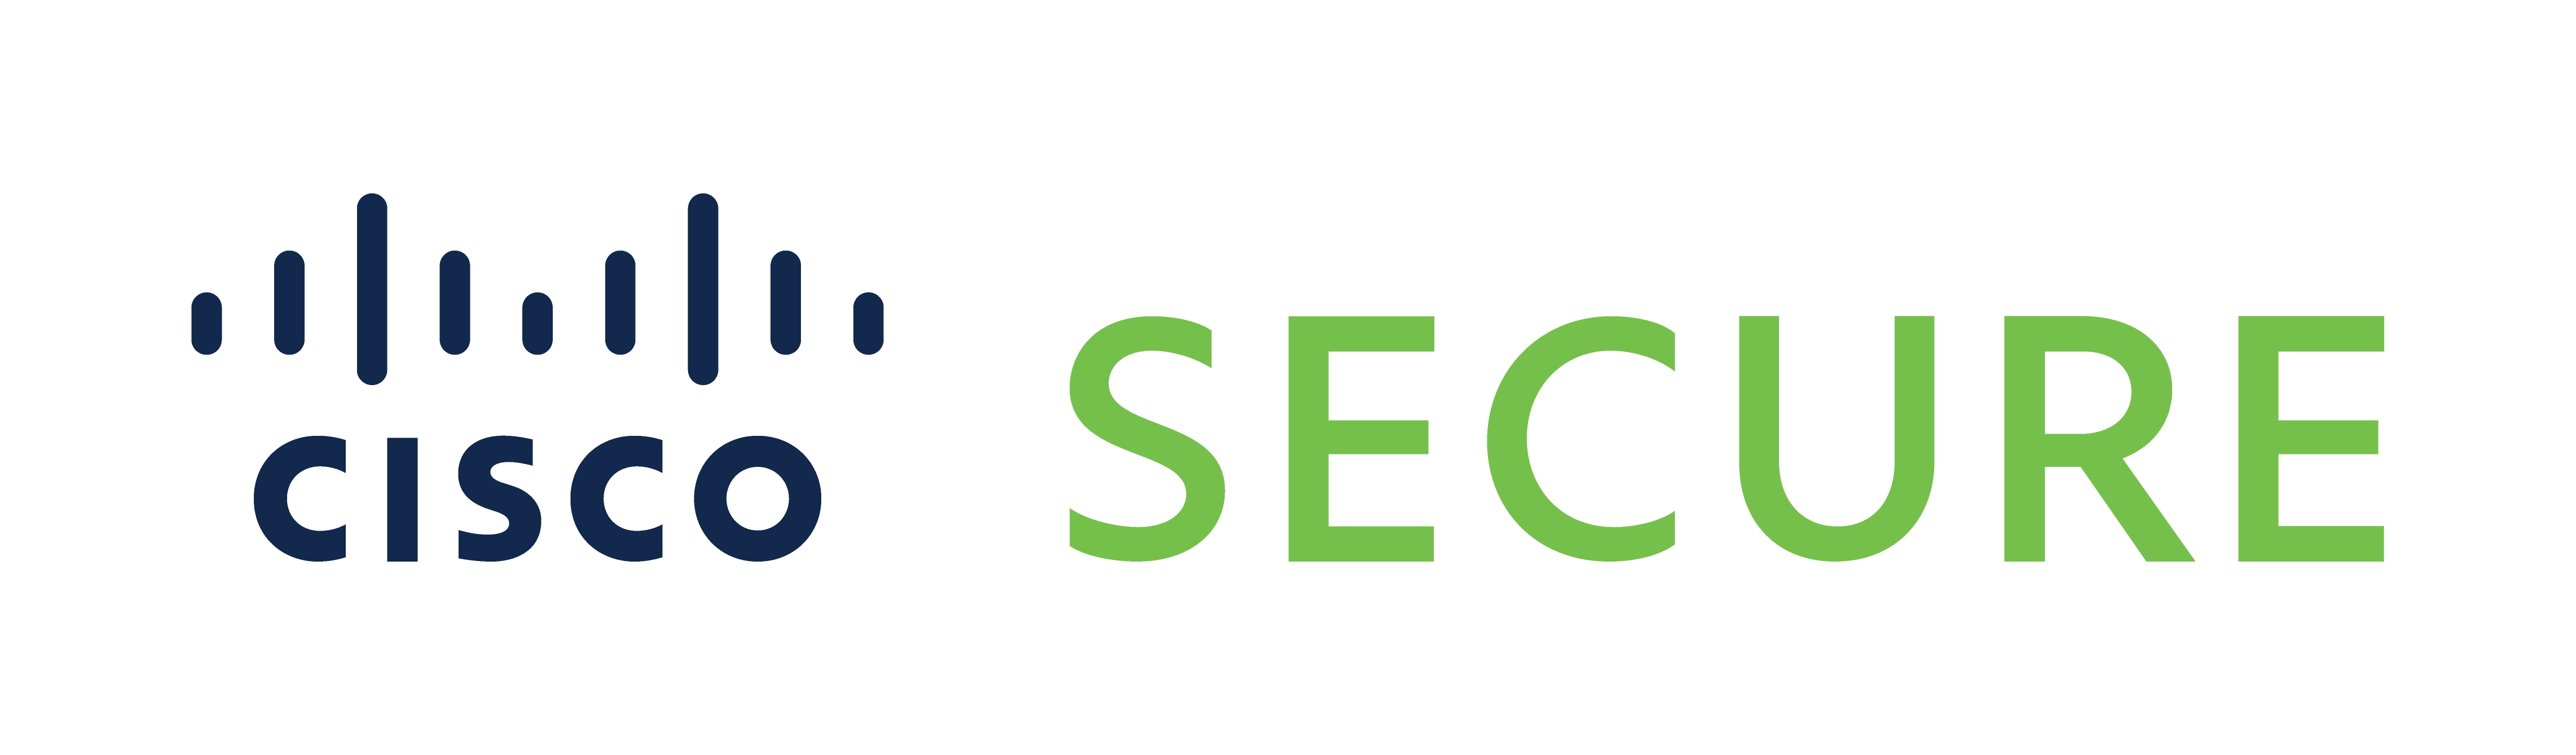 cisco-secure-logo.png